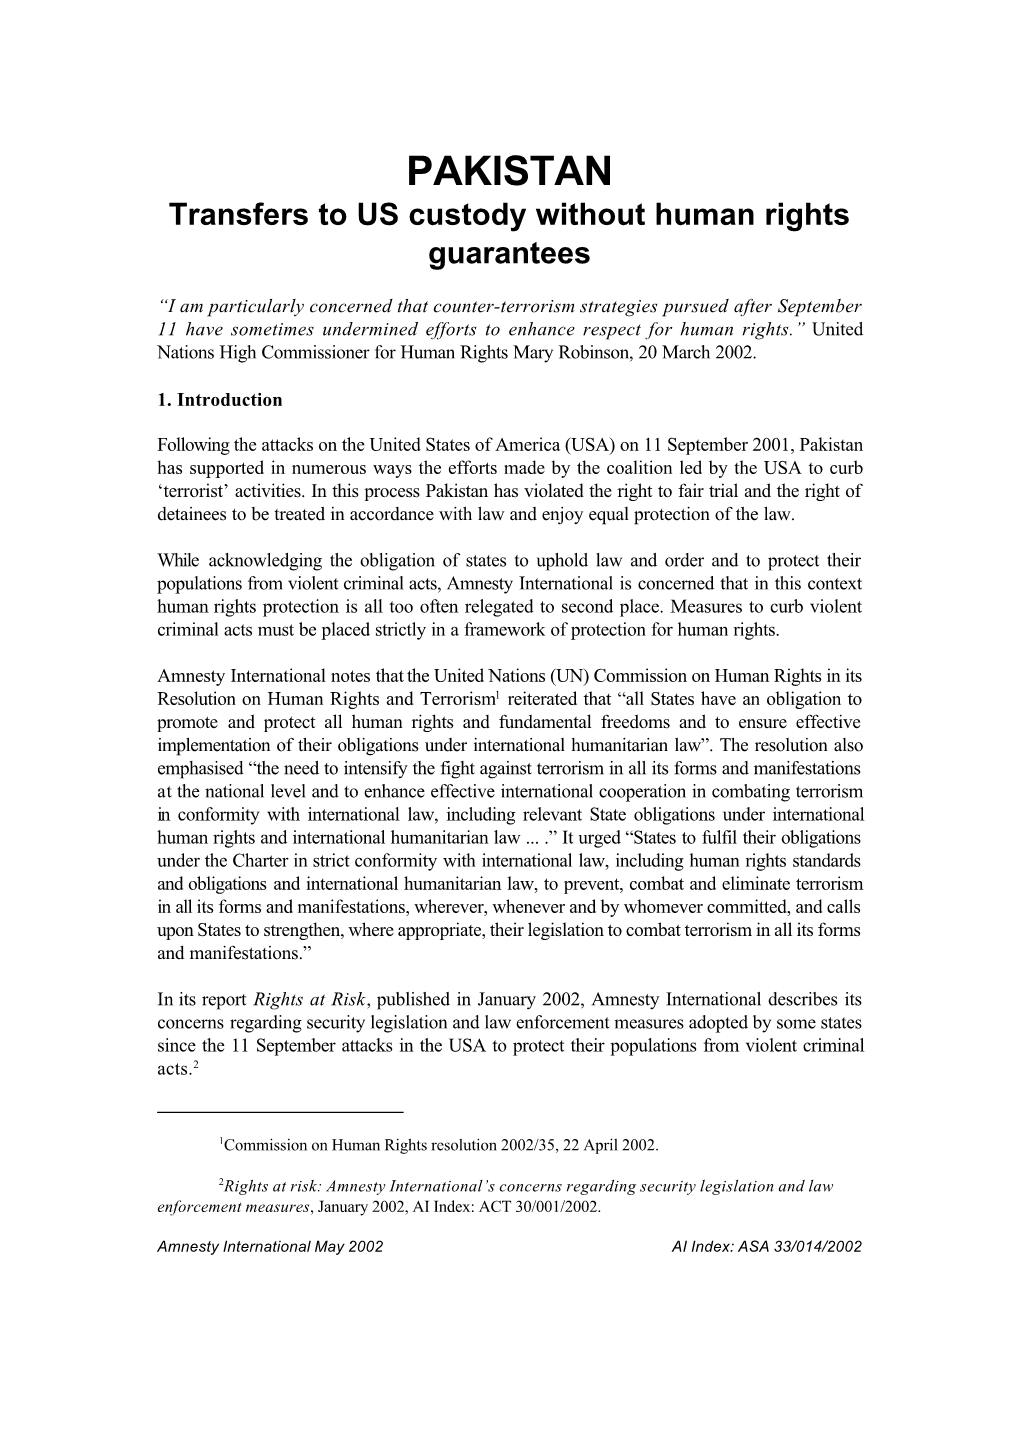 PAKISTAN Transfers to US Custody Without Human Rights Guarantees